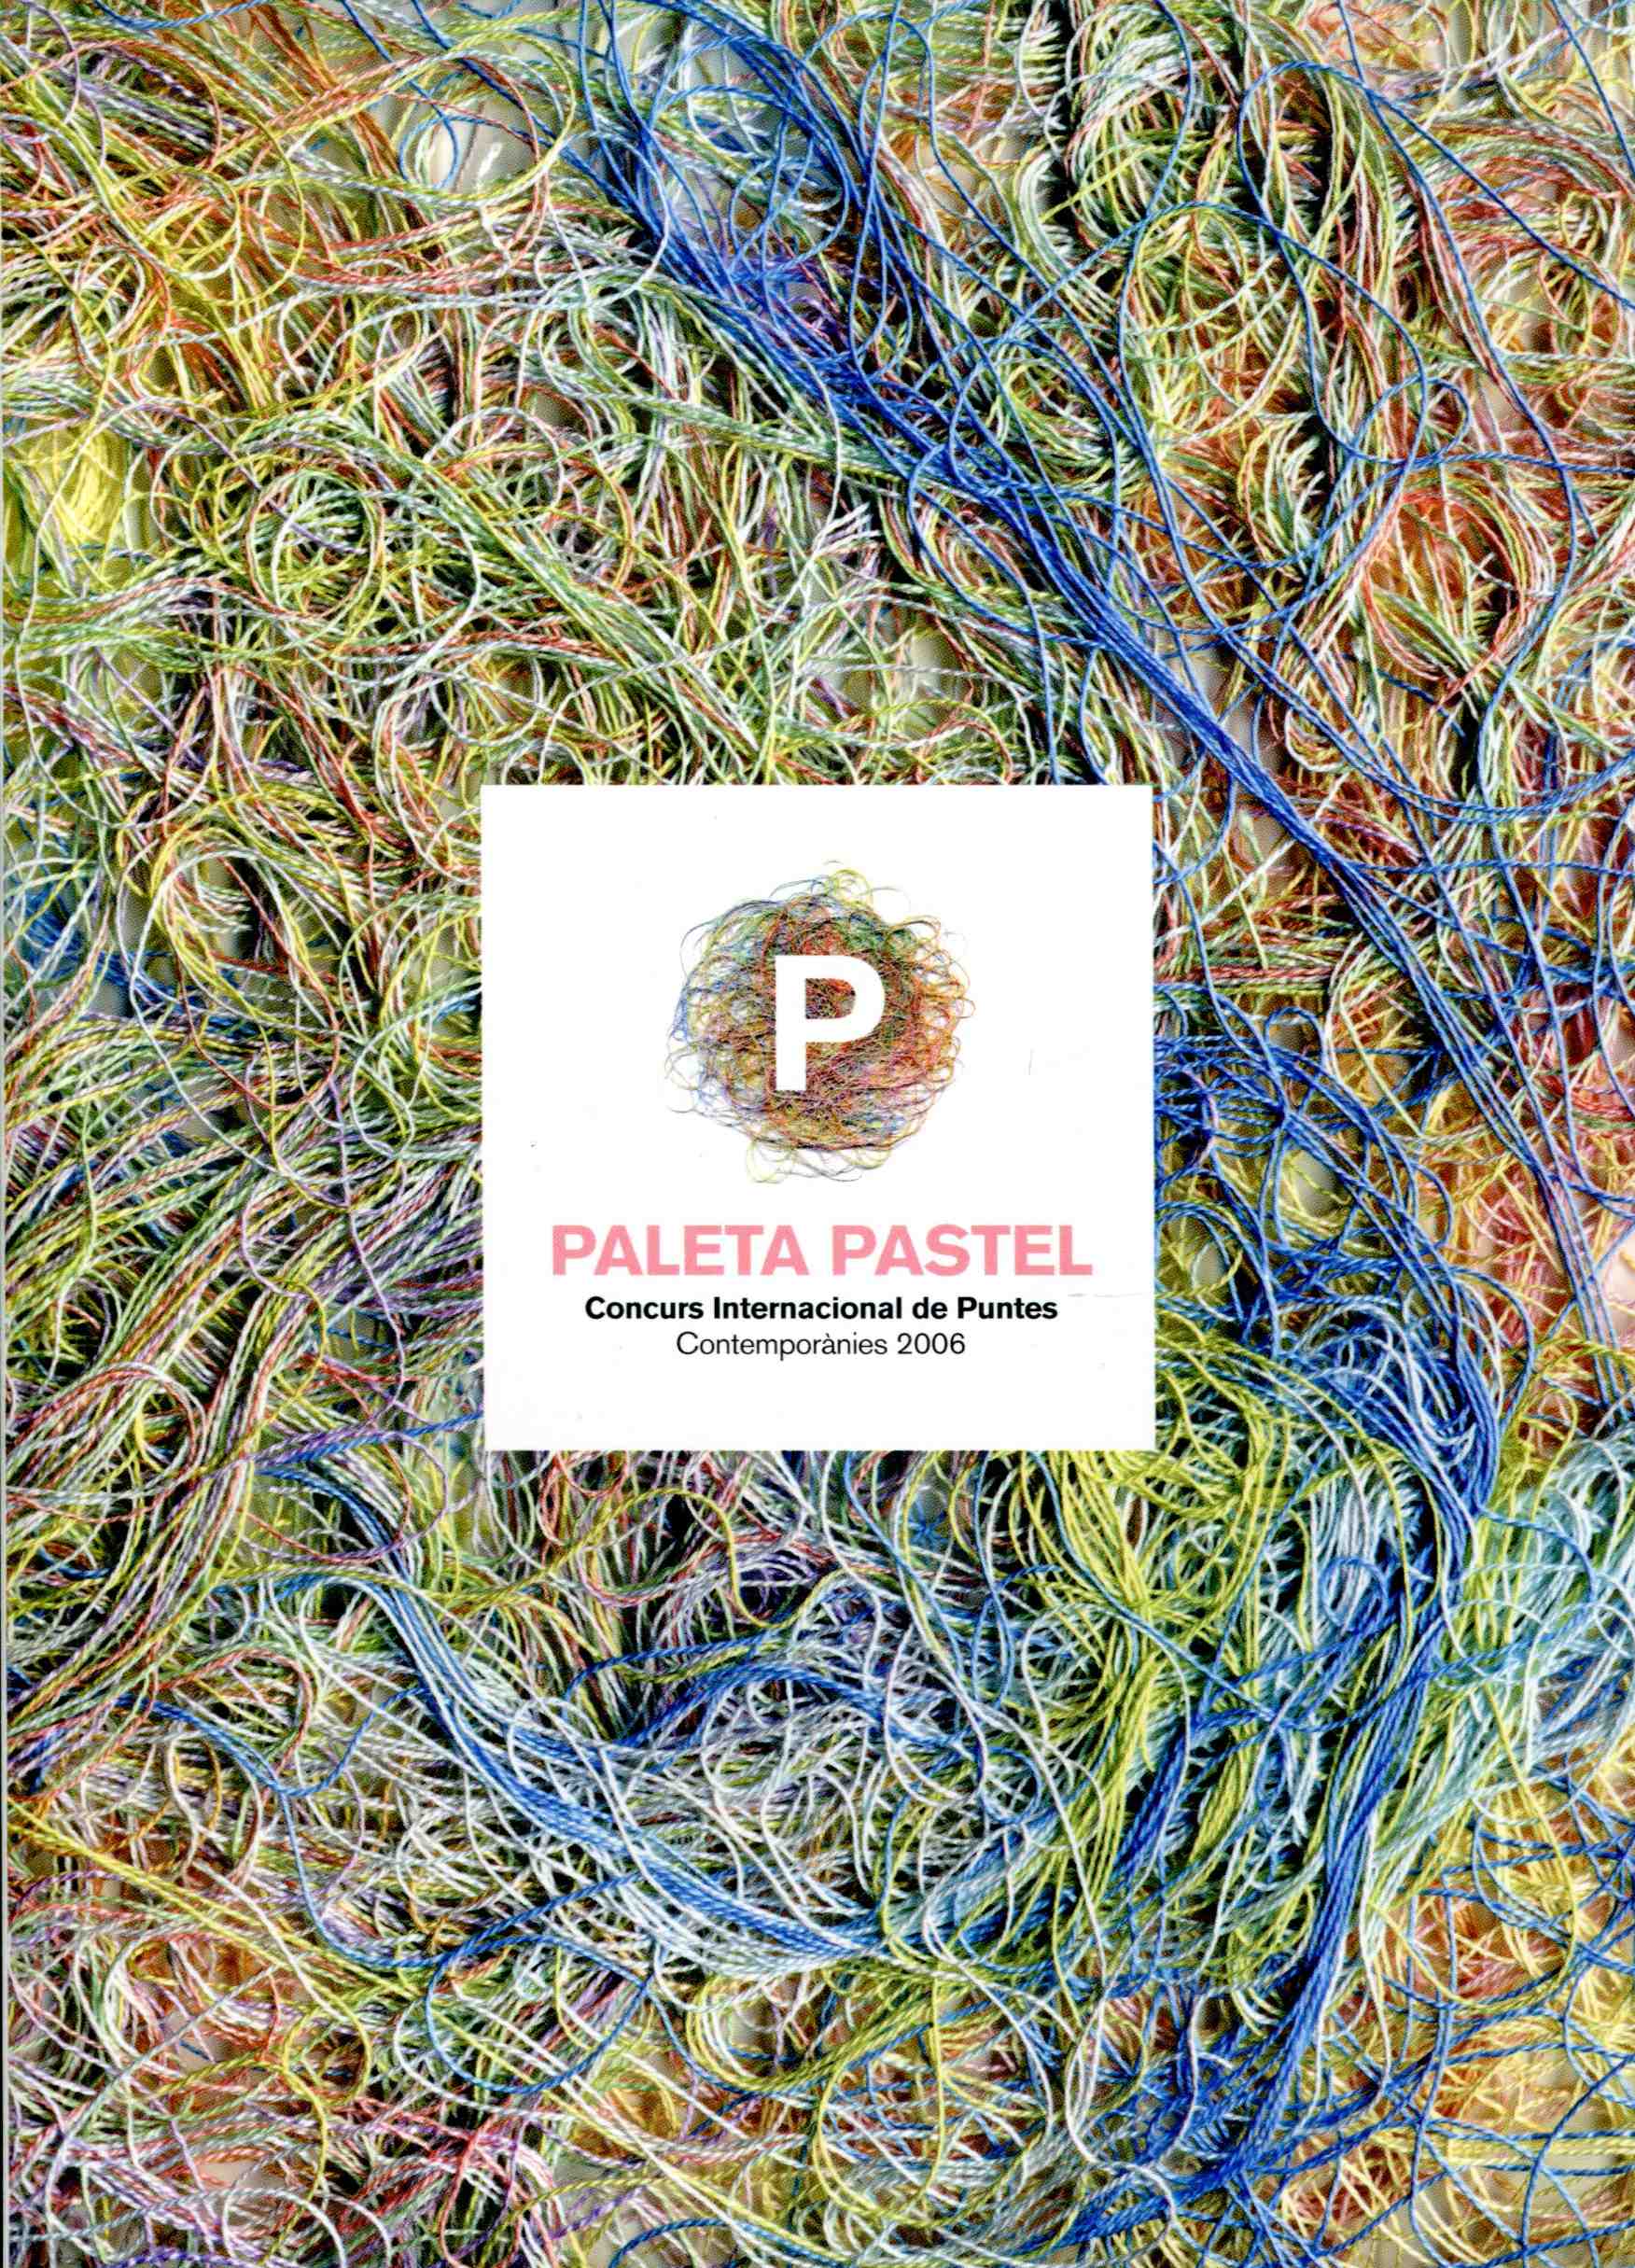 Paleta Pastel - Concurs Internacional de Puntes 2006